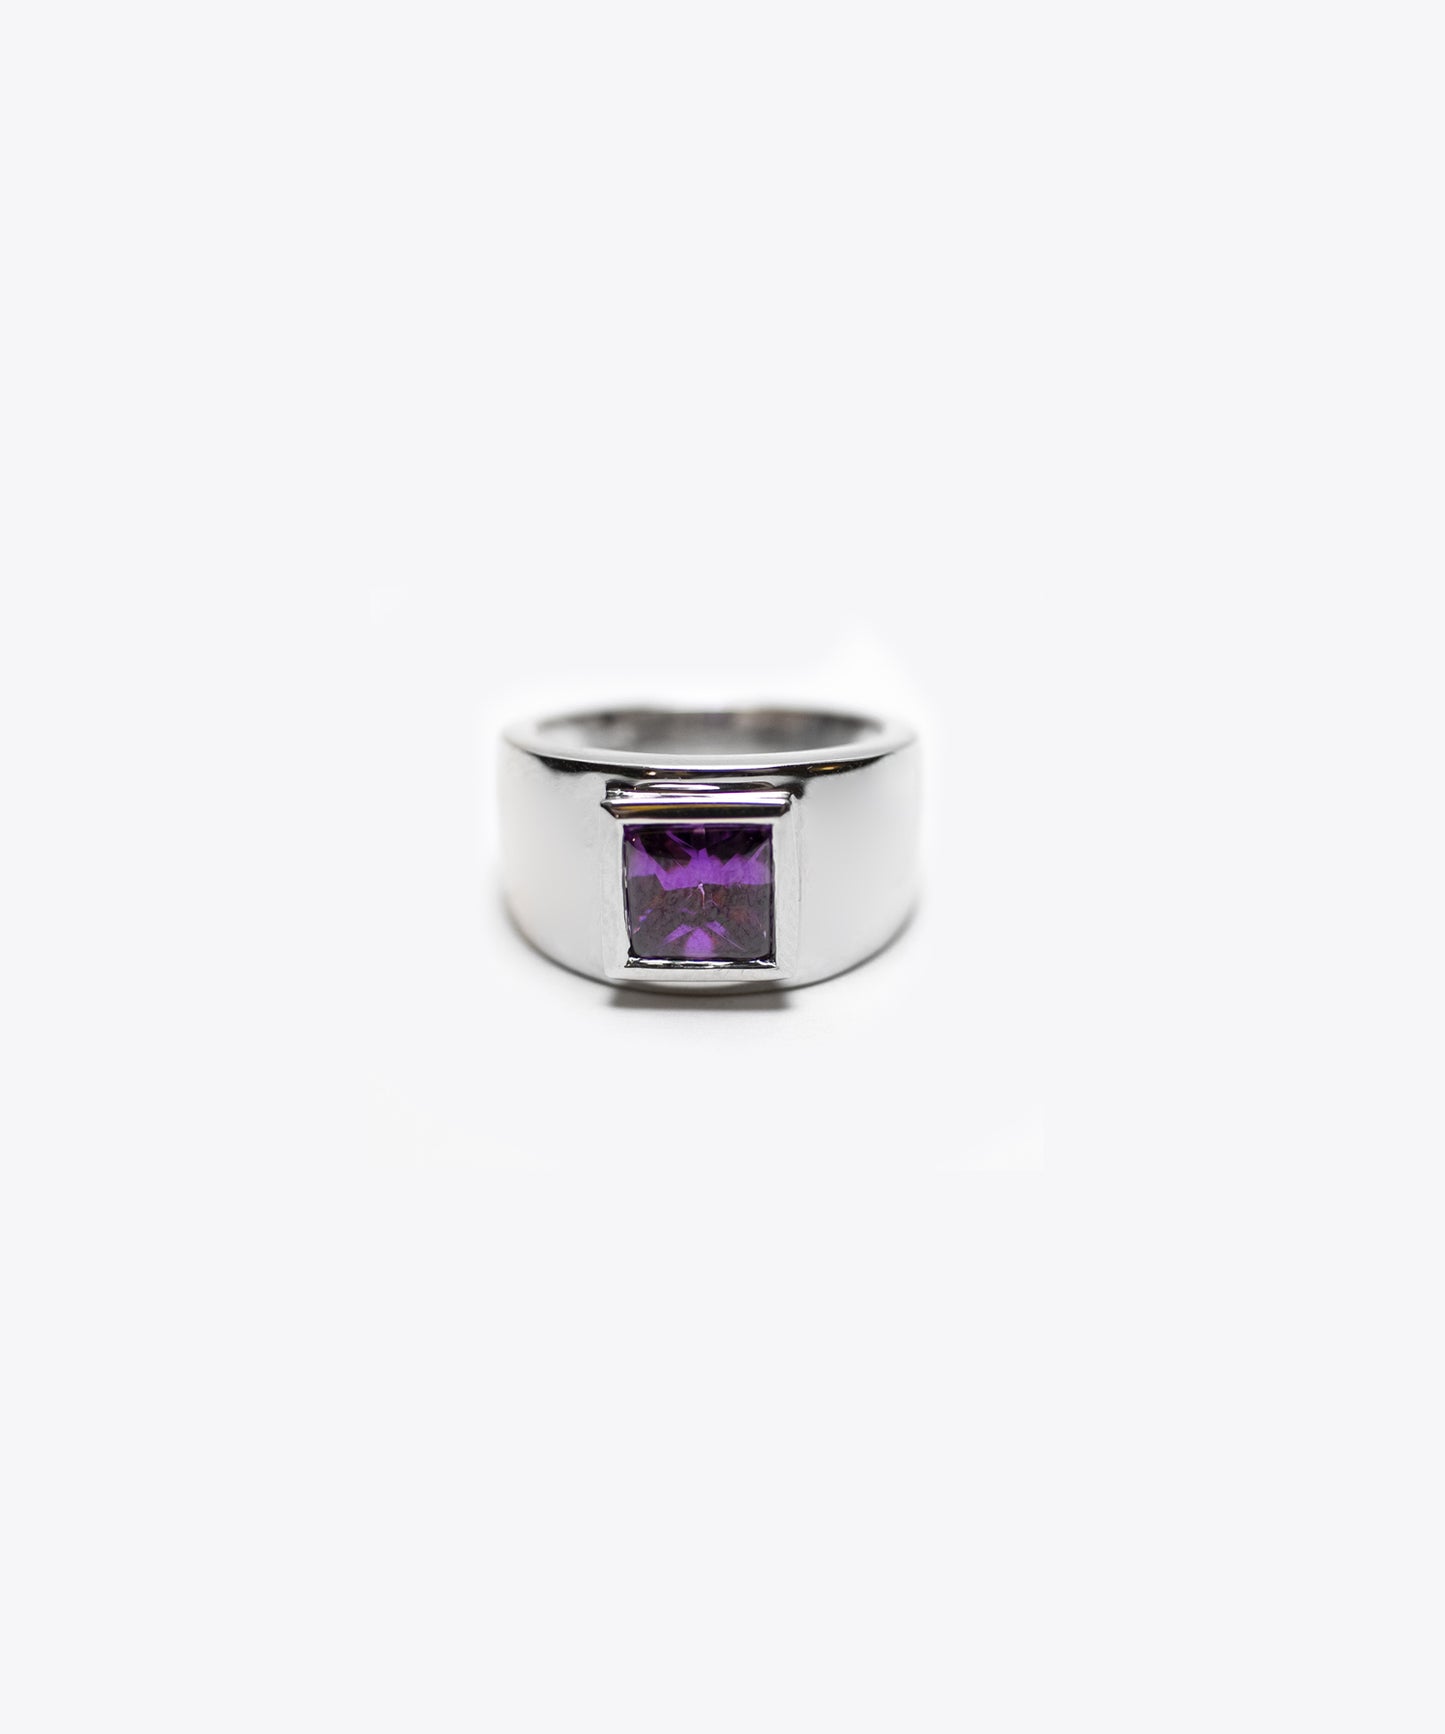 The Midan Violet Ring